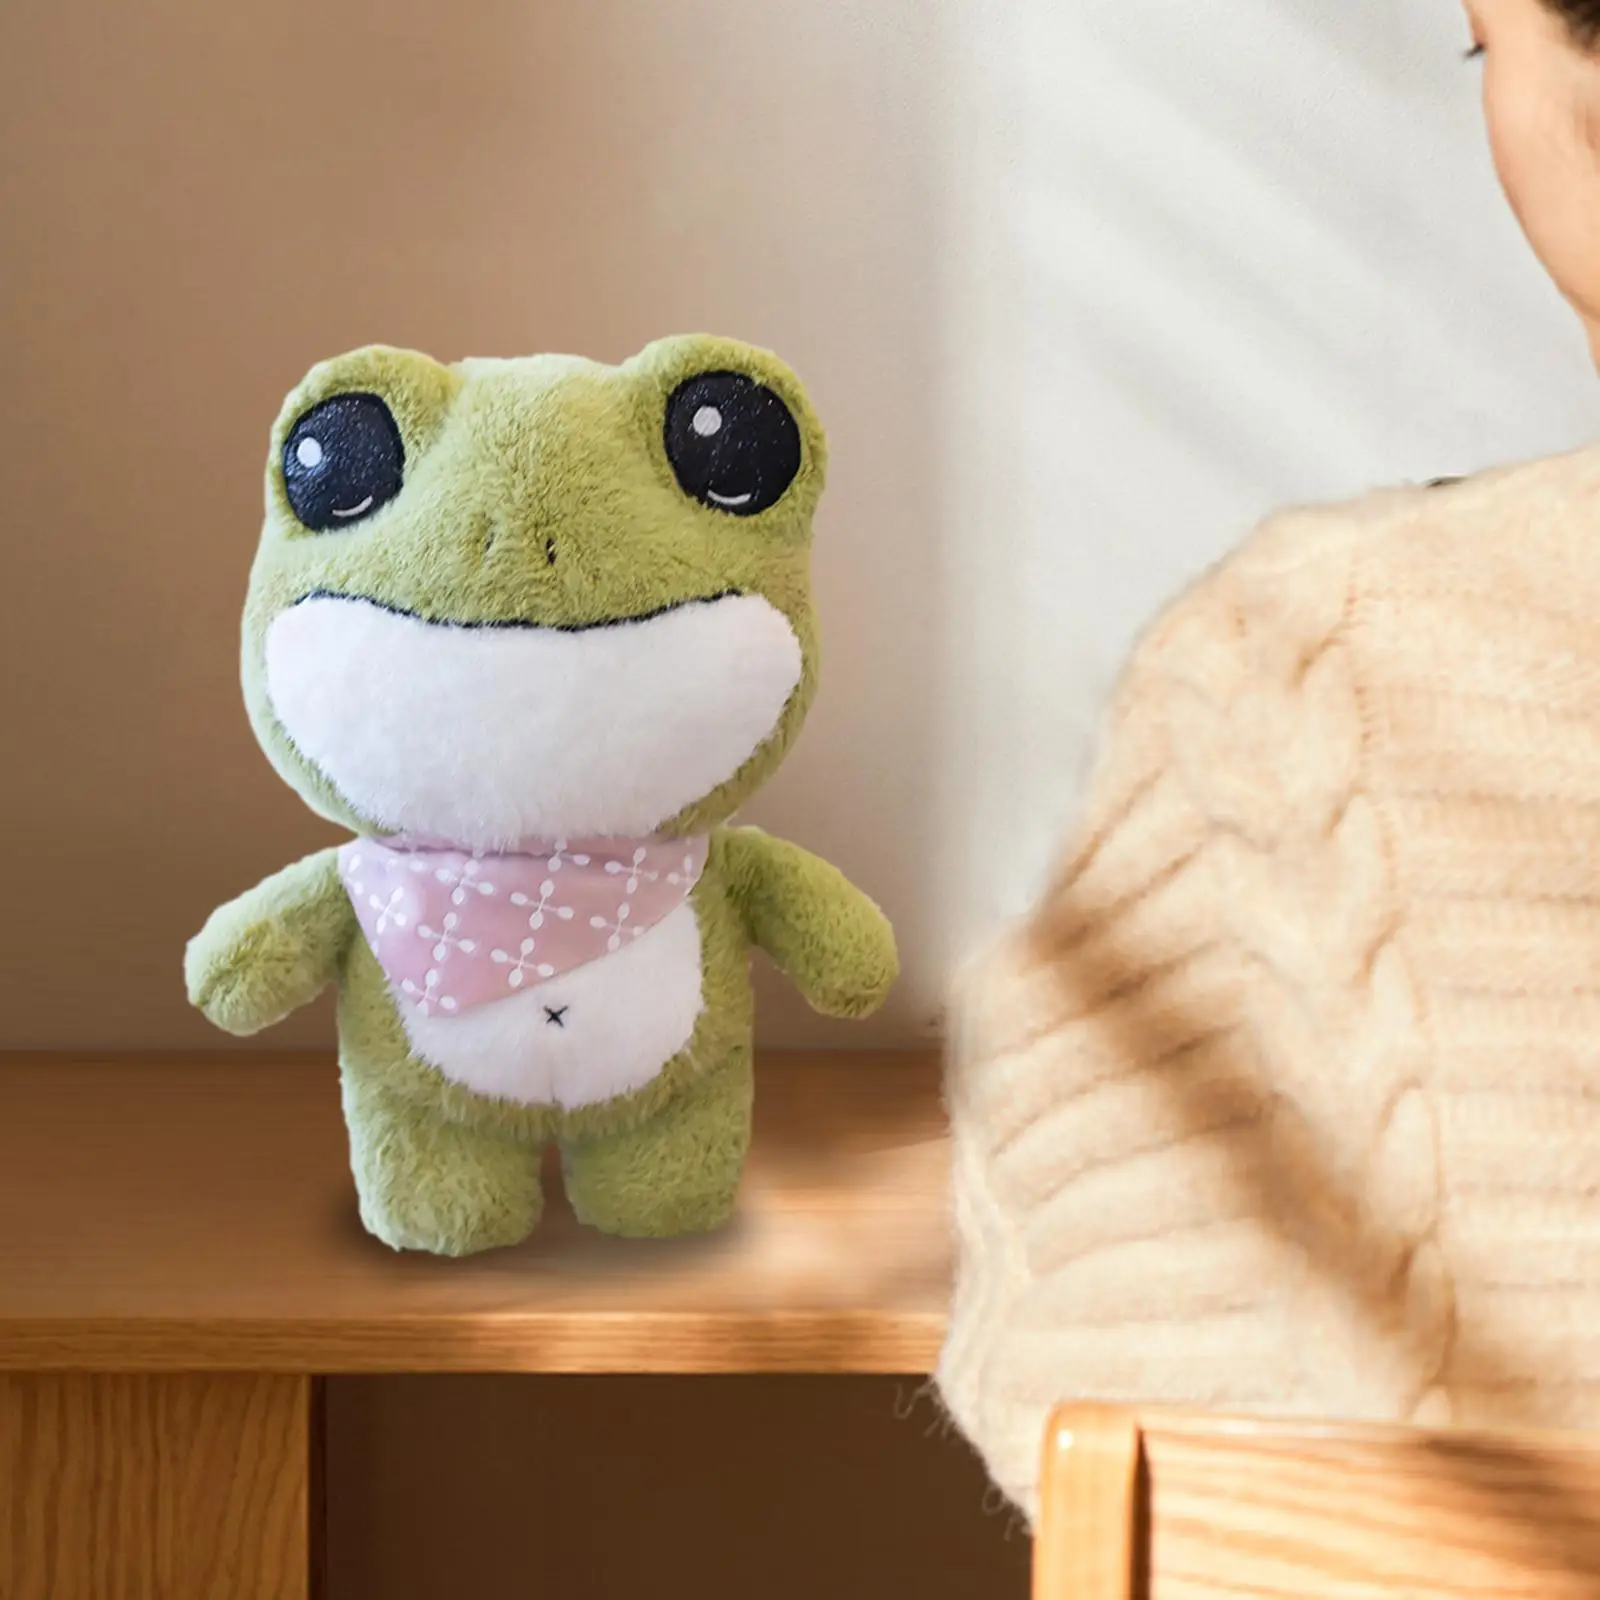 Frog Stuffed Animal 12 inch Stuffed for Desktop Decor Birthday Gifts style 1